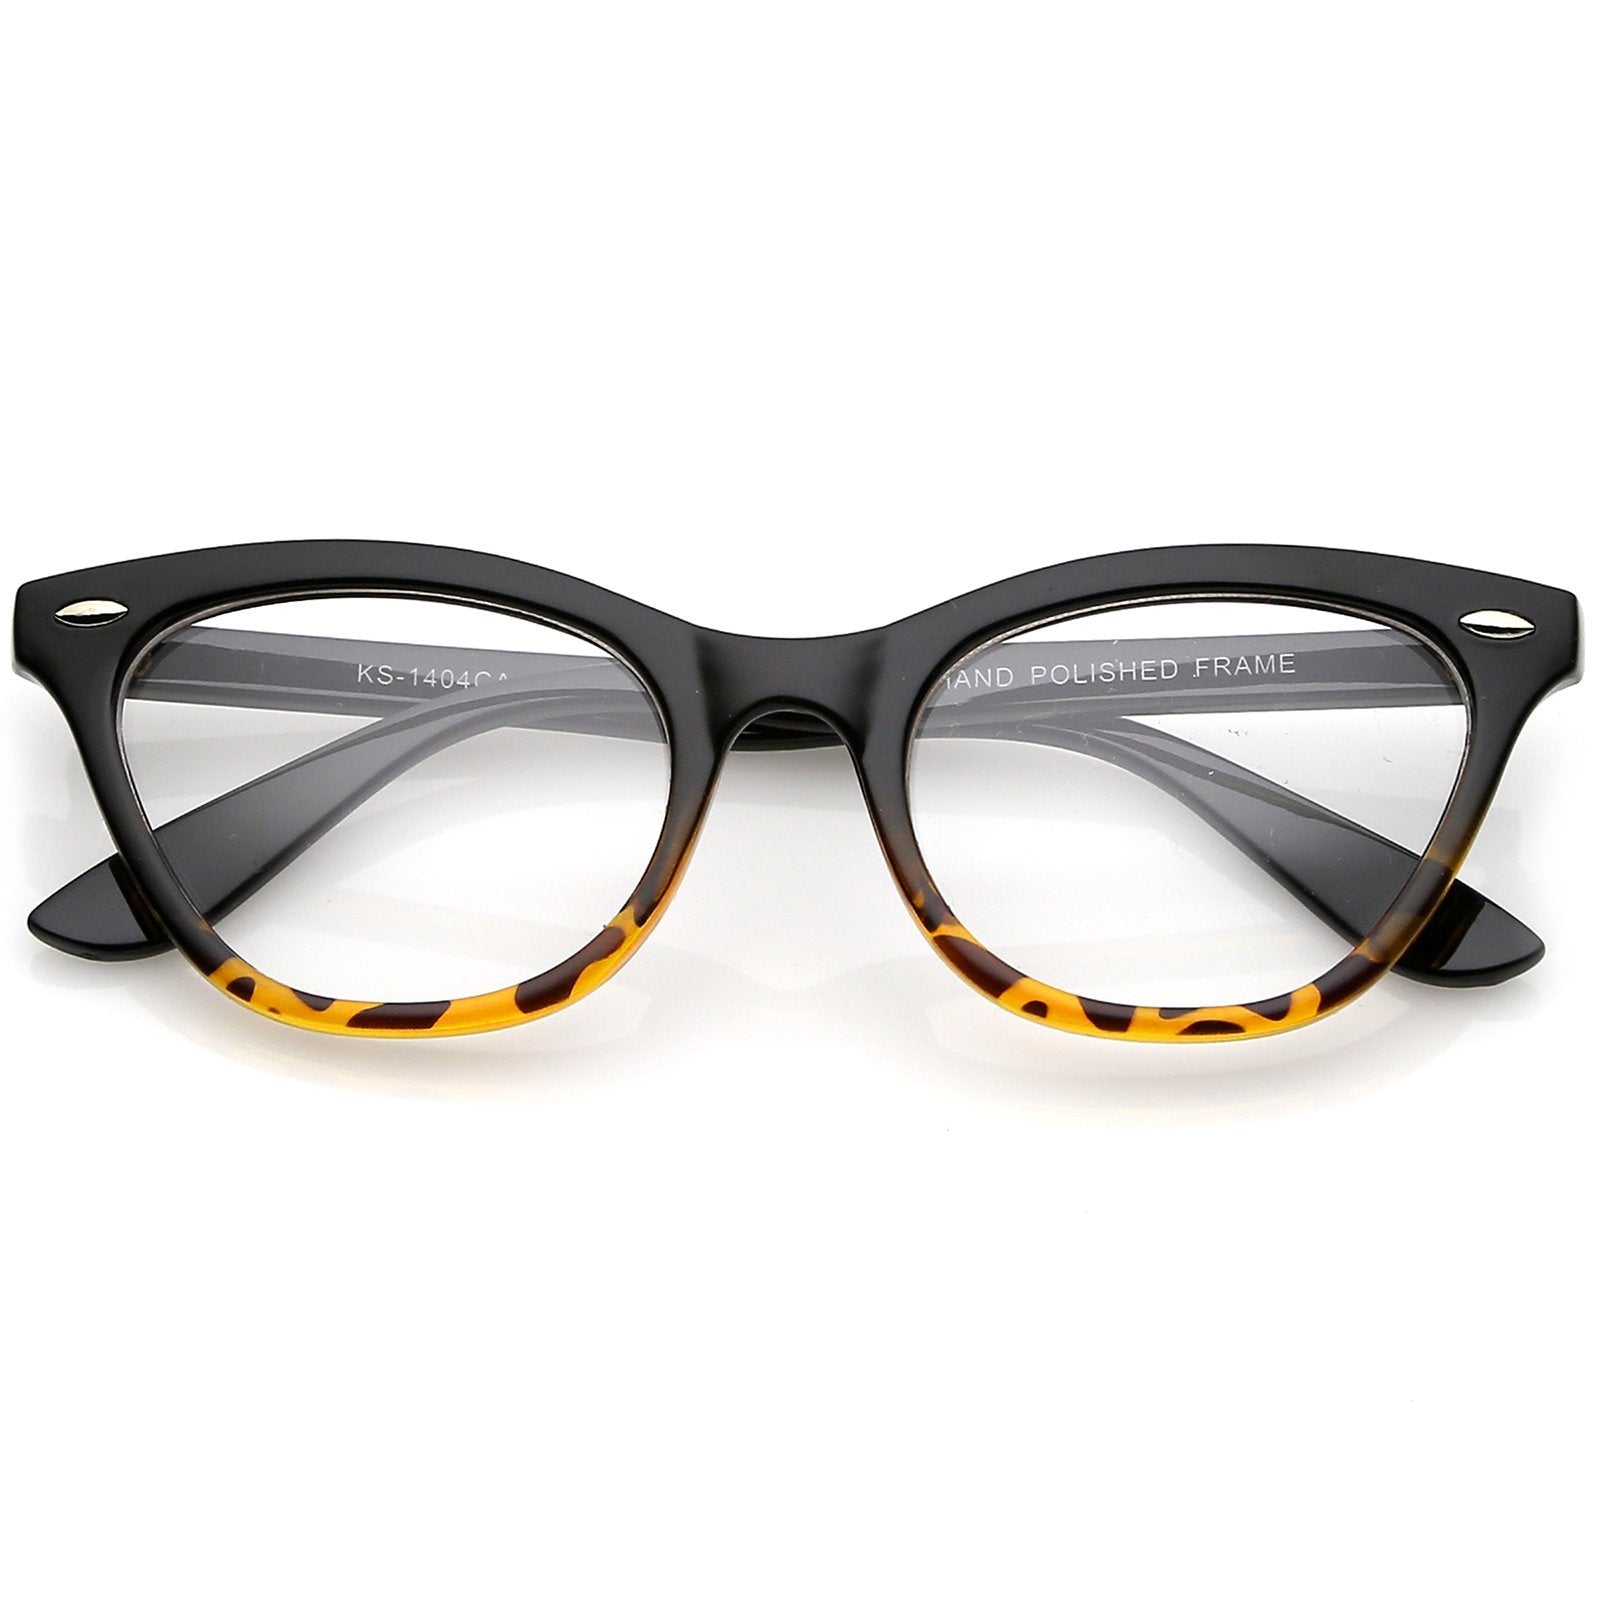 zeroUV Women's 50s Vintage Cat Eye Sunglasses